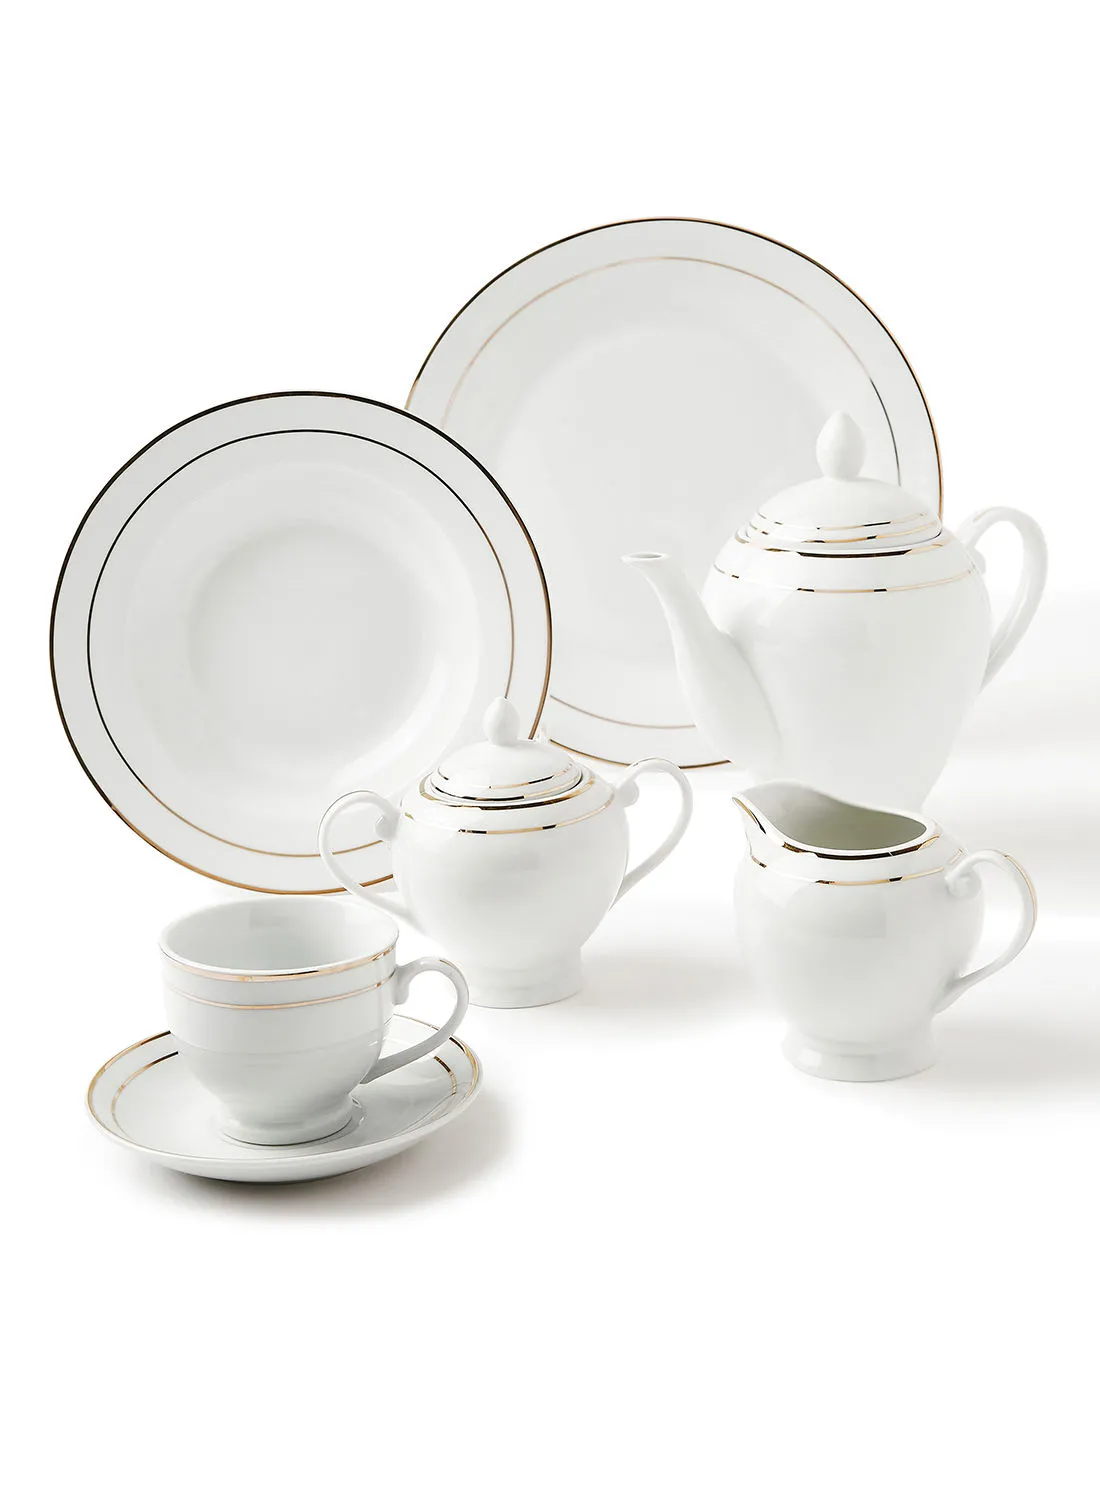 noon east 56 Piece Porcelain Dinner Set - Dishes, Plates - Dinner Plate, Side Plate, Bowl, Cups, Serving Dish And Bowl - Serves 6 - Festive Design White/Gold Line